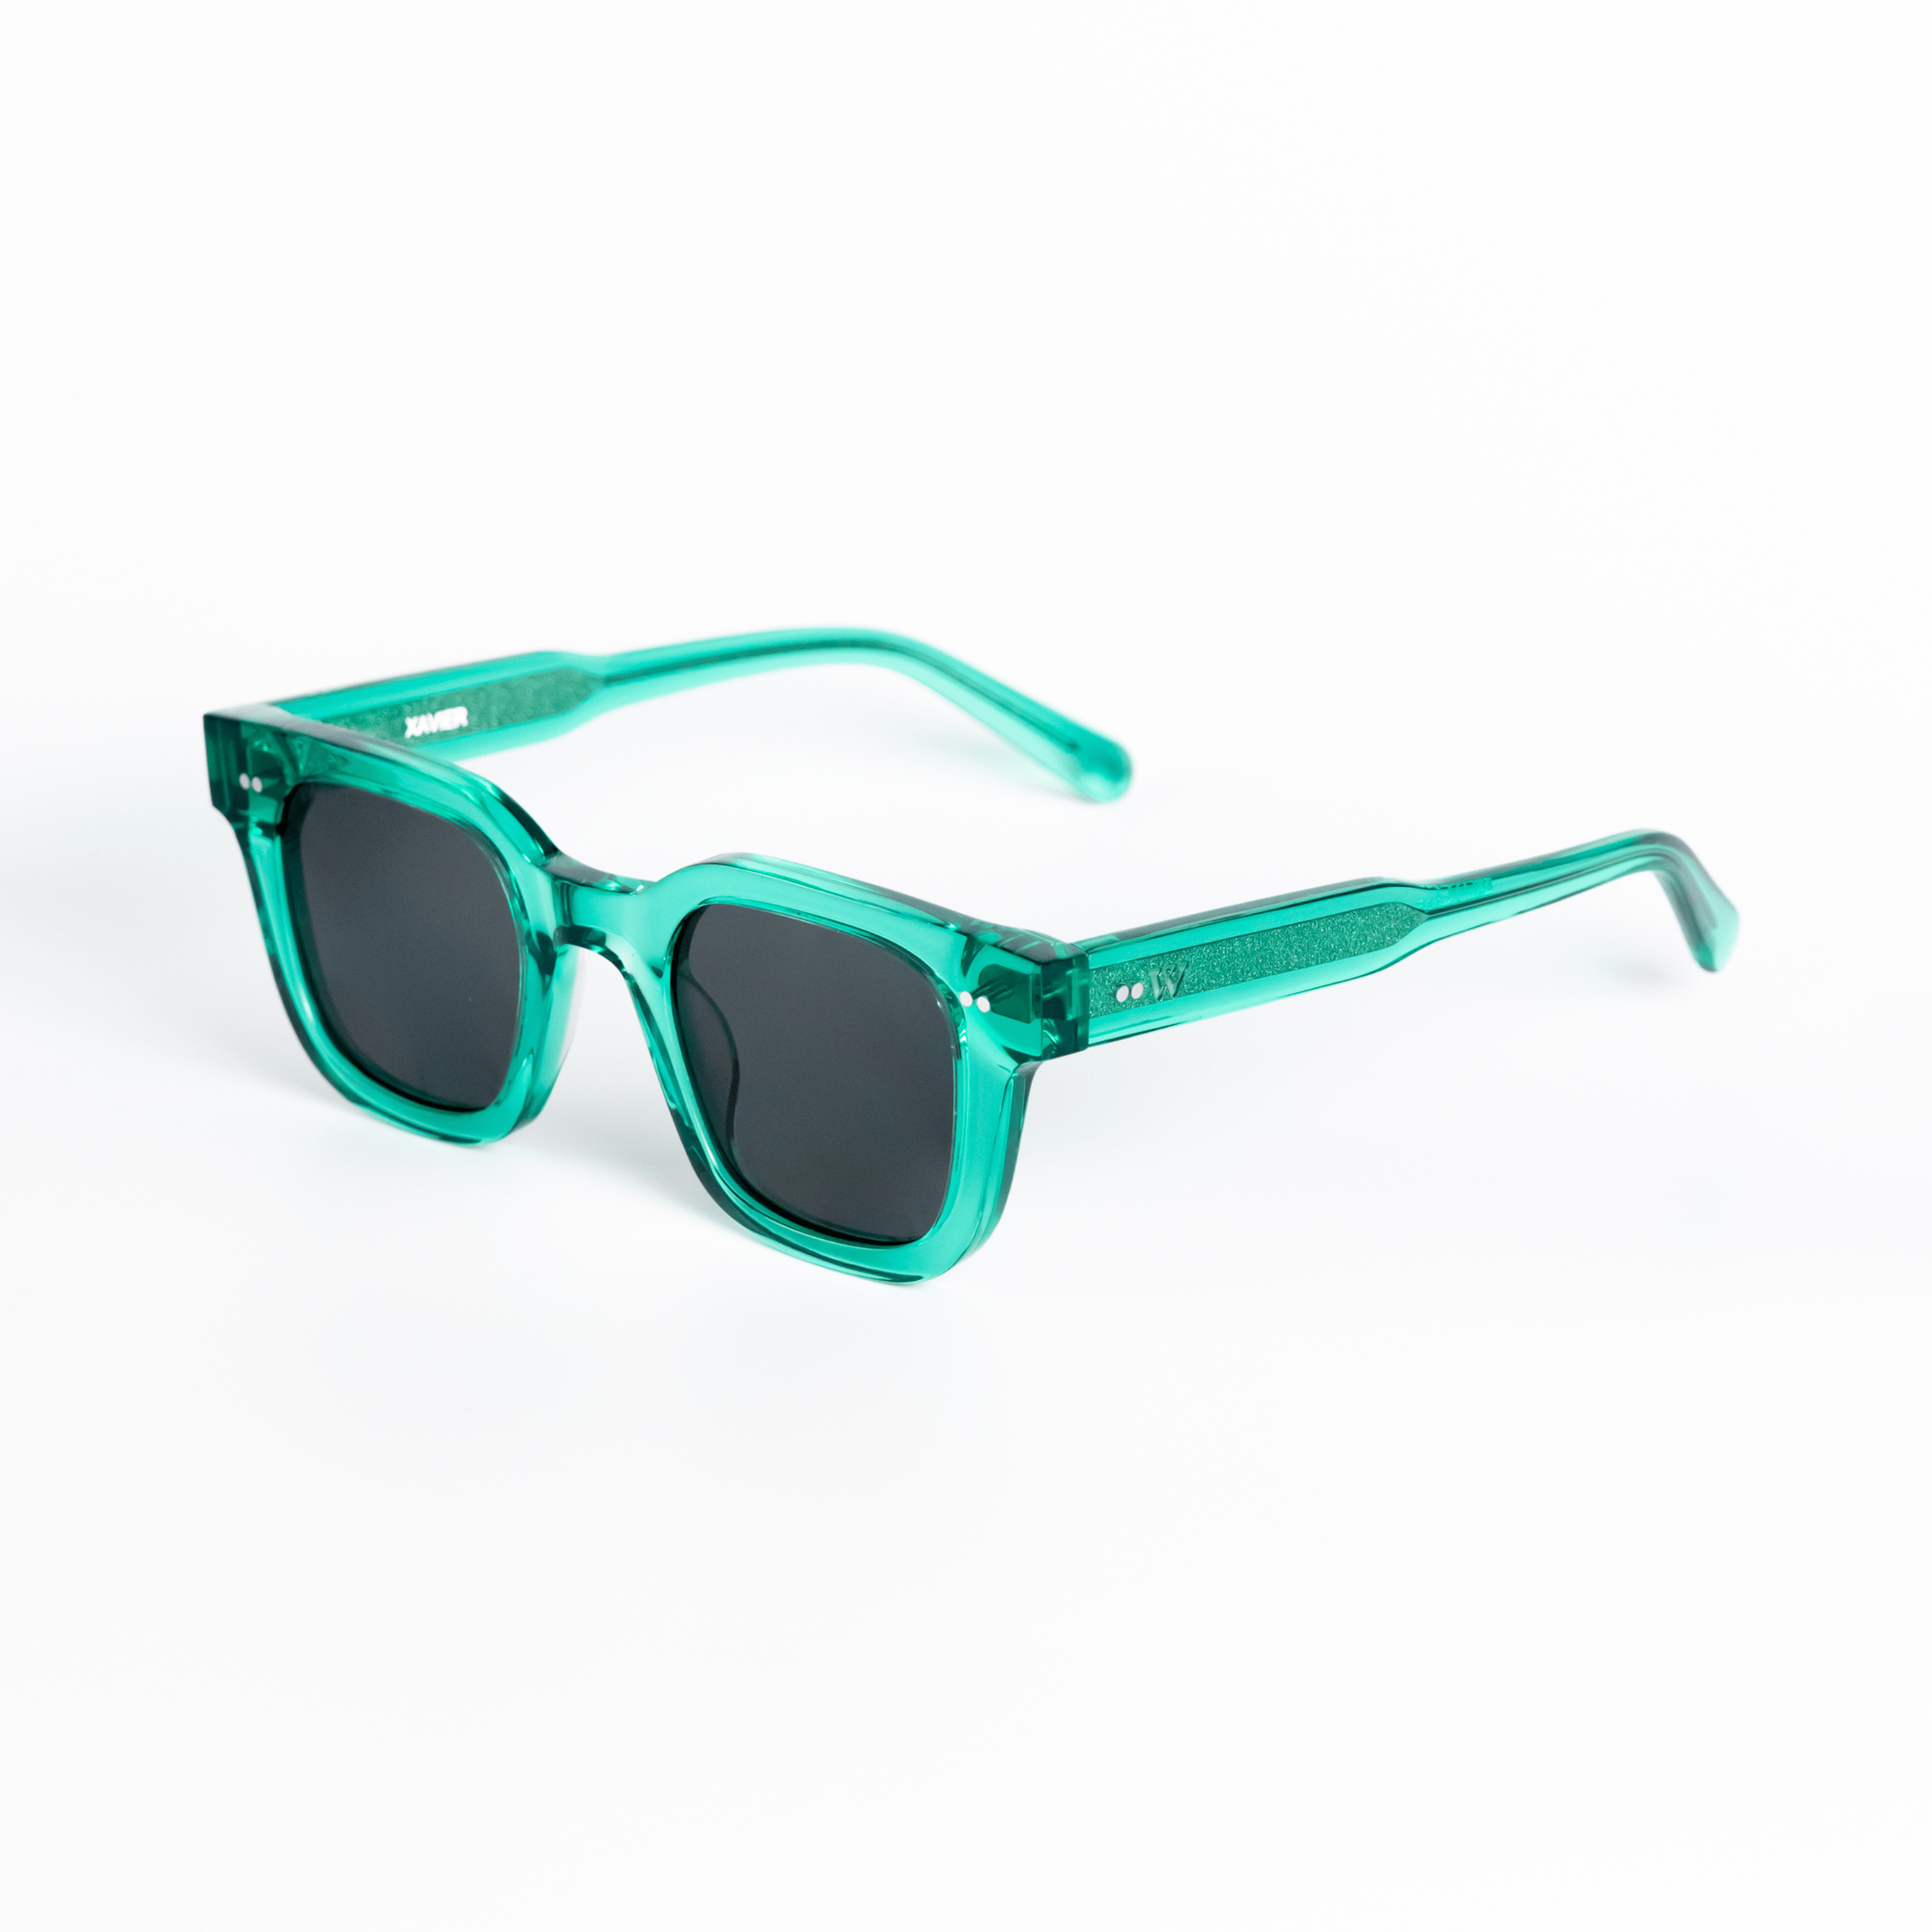 Walter Hill Sunglasses Ruby Red / Standard / Polarized Cat.3 XAVIER - Green